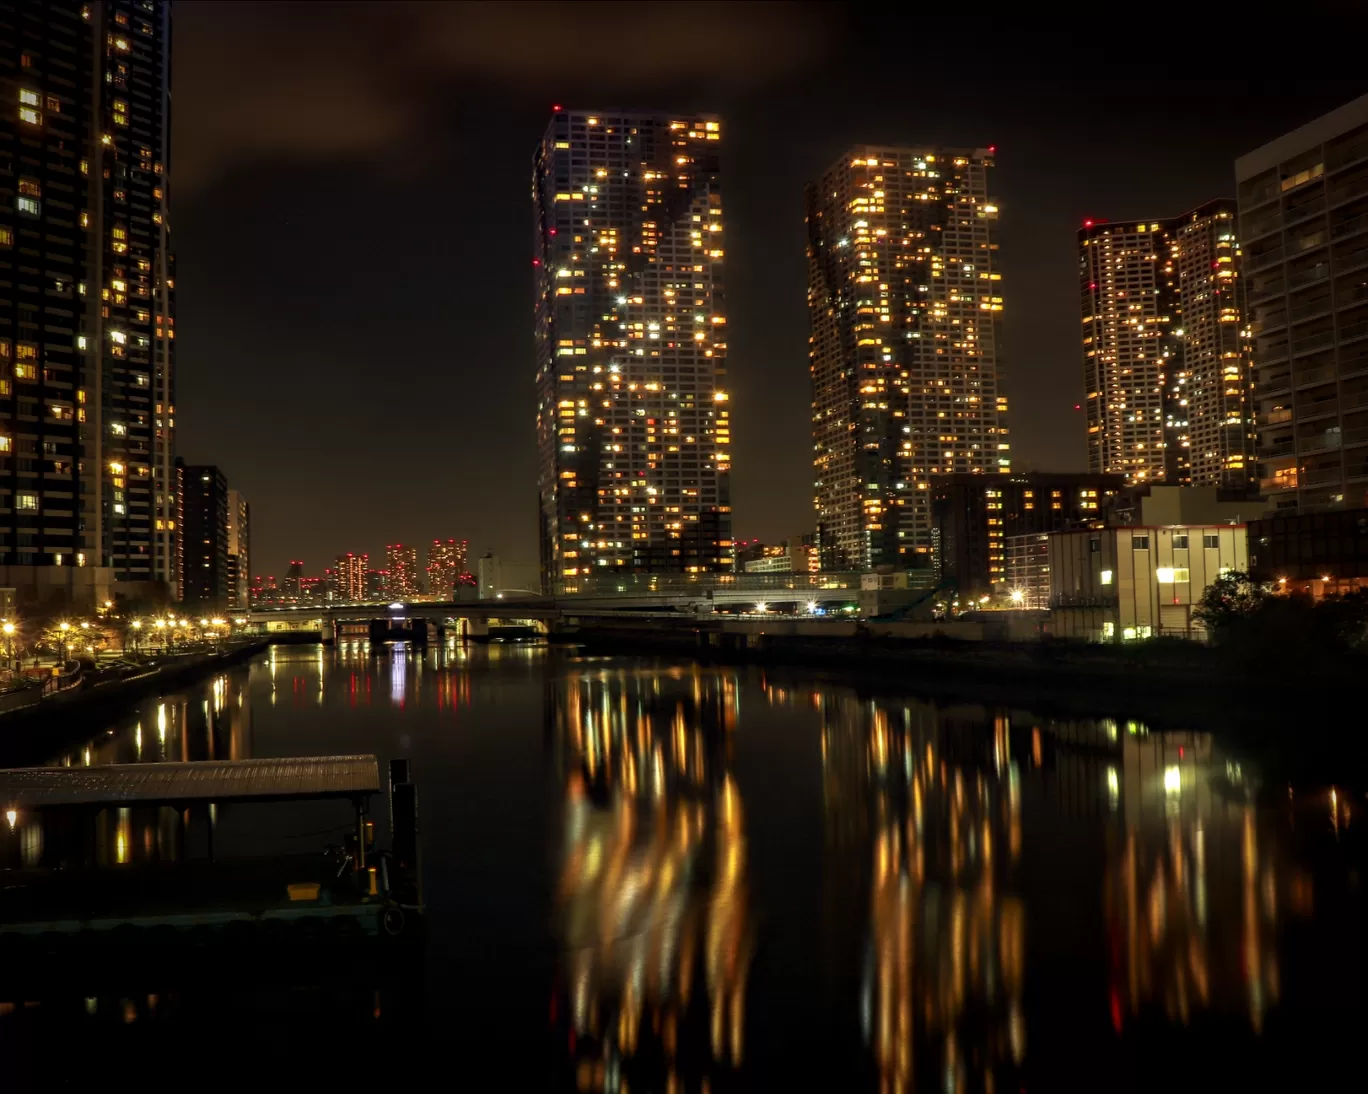 Photo of Tokyo By Vishwanath Moolya